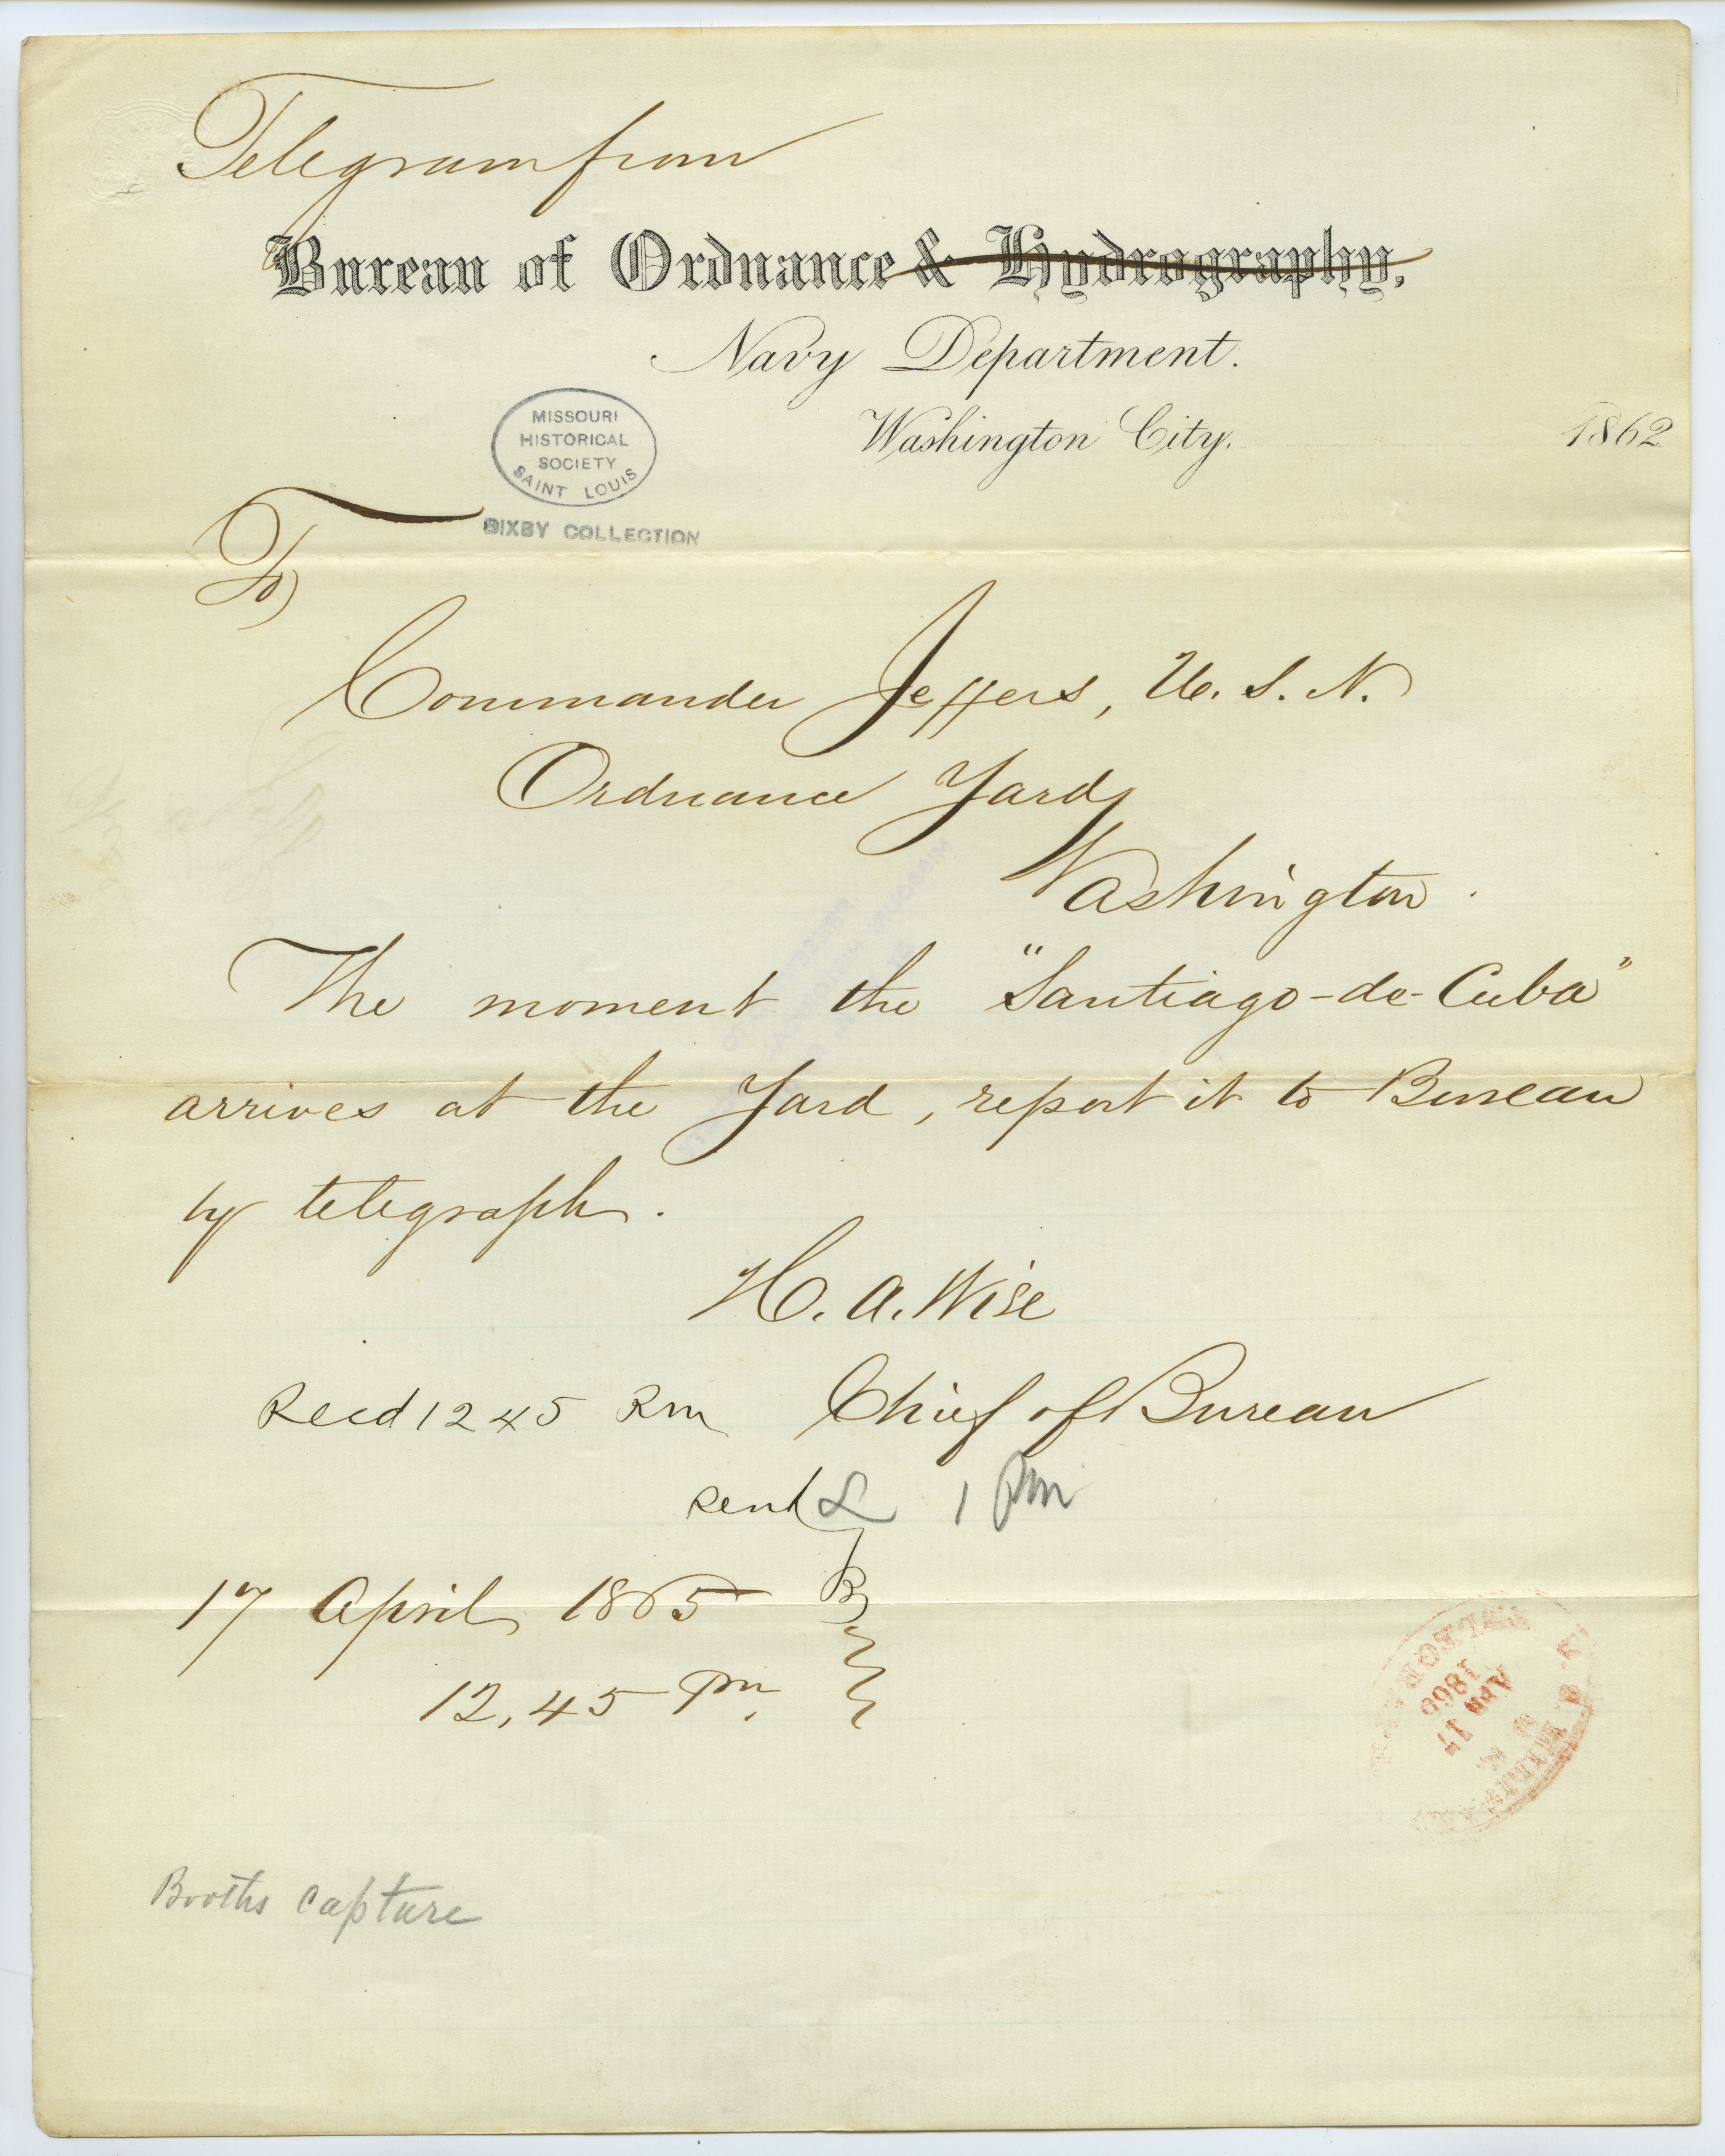 Contemporary copy of telegram of H.A. Wise, Chief of Bureau, Bureau of Ordnance, Navy Department, Washington City, to Commander Jeffers, U.S.N., Ordnance Yard, Washington, April 17, 1865